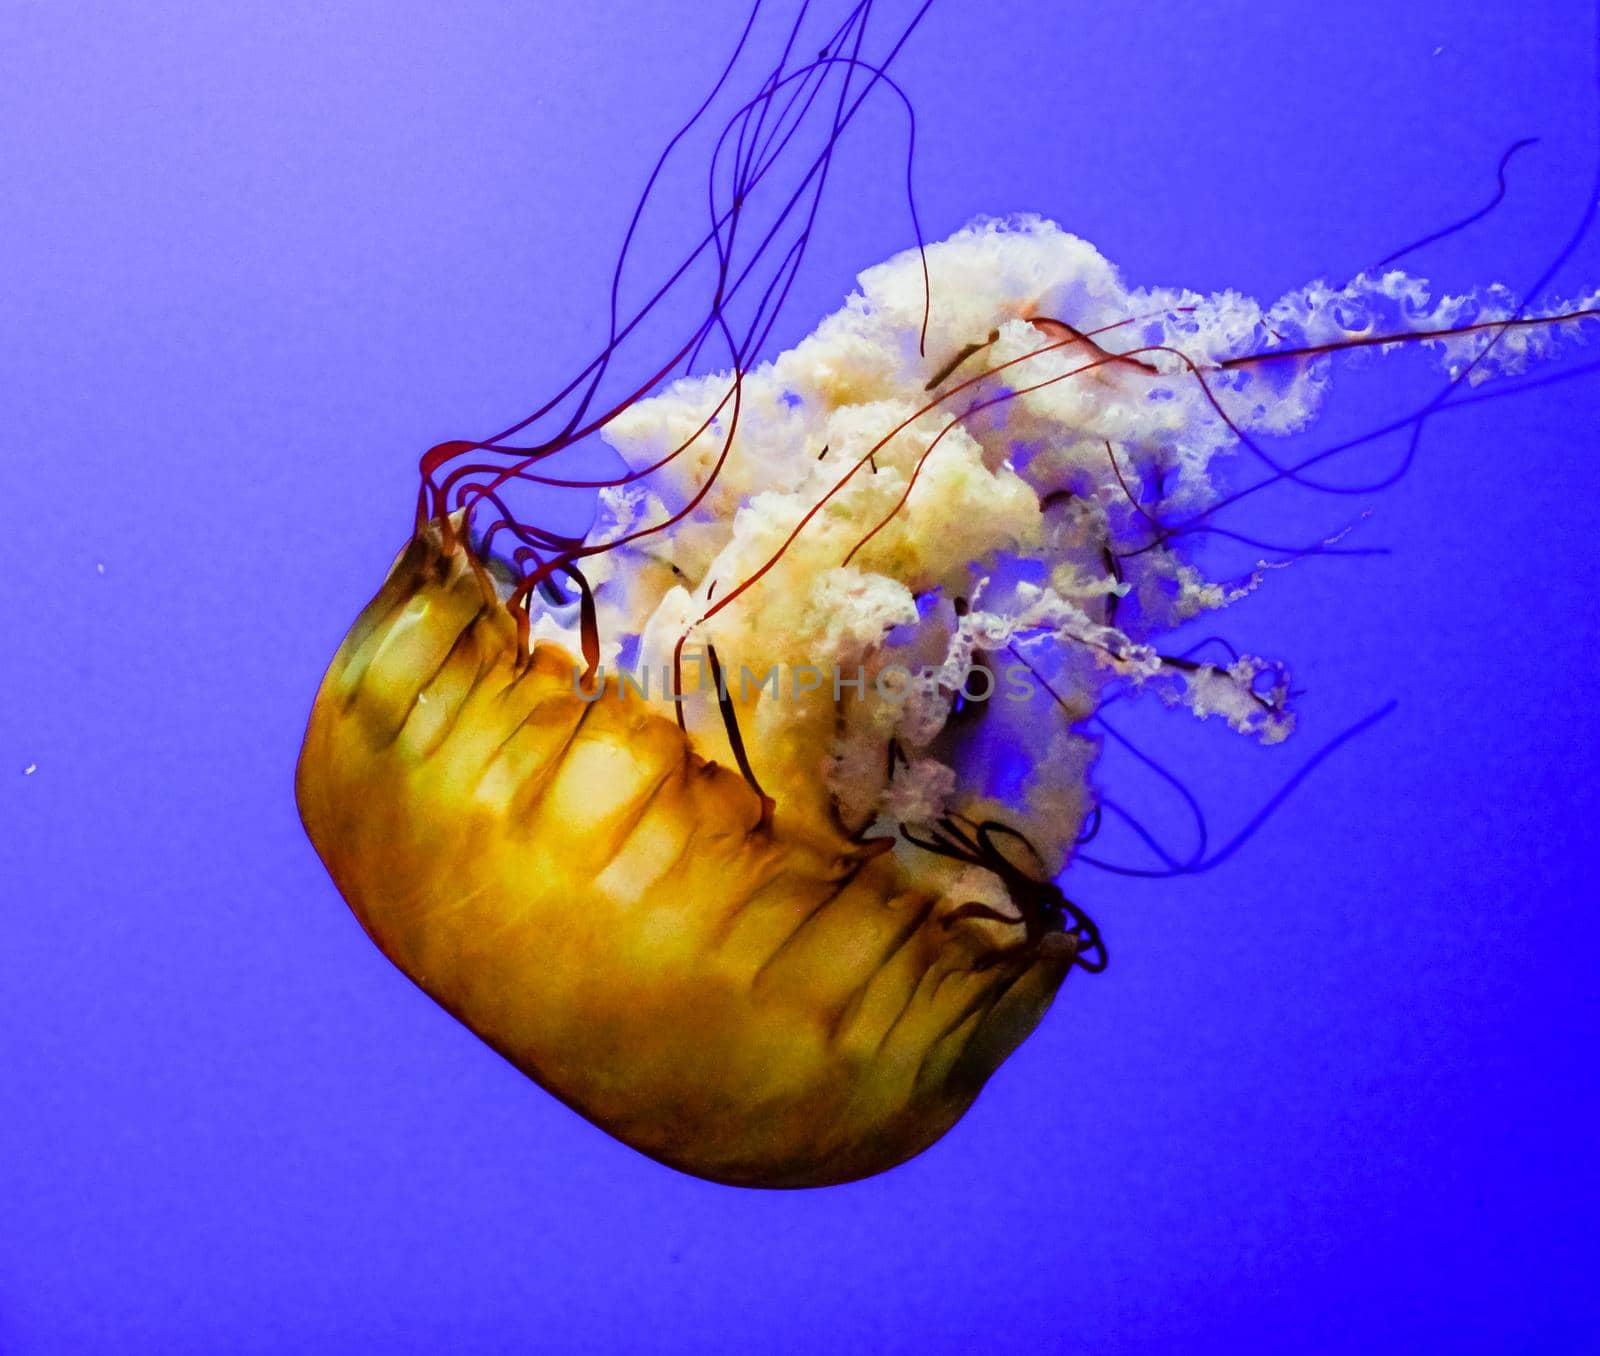 Jellyfish are marine invertebrates belonging to the Scyphozoan class, and in turn the phylum Cnidaria.